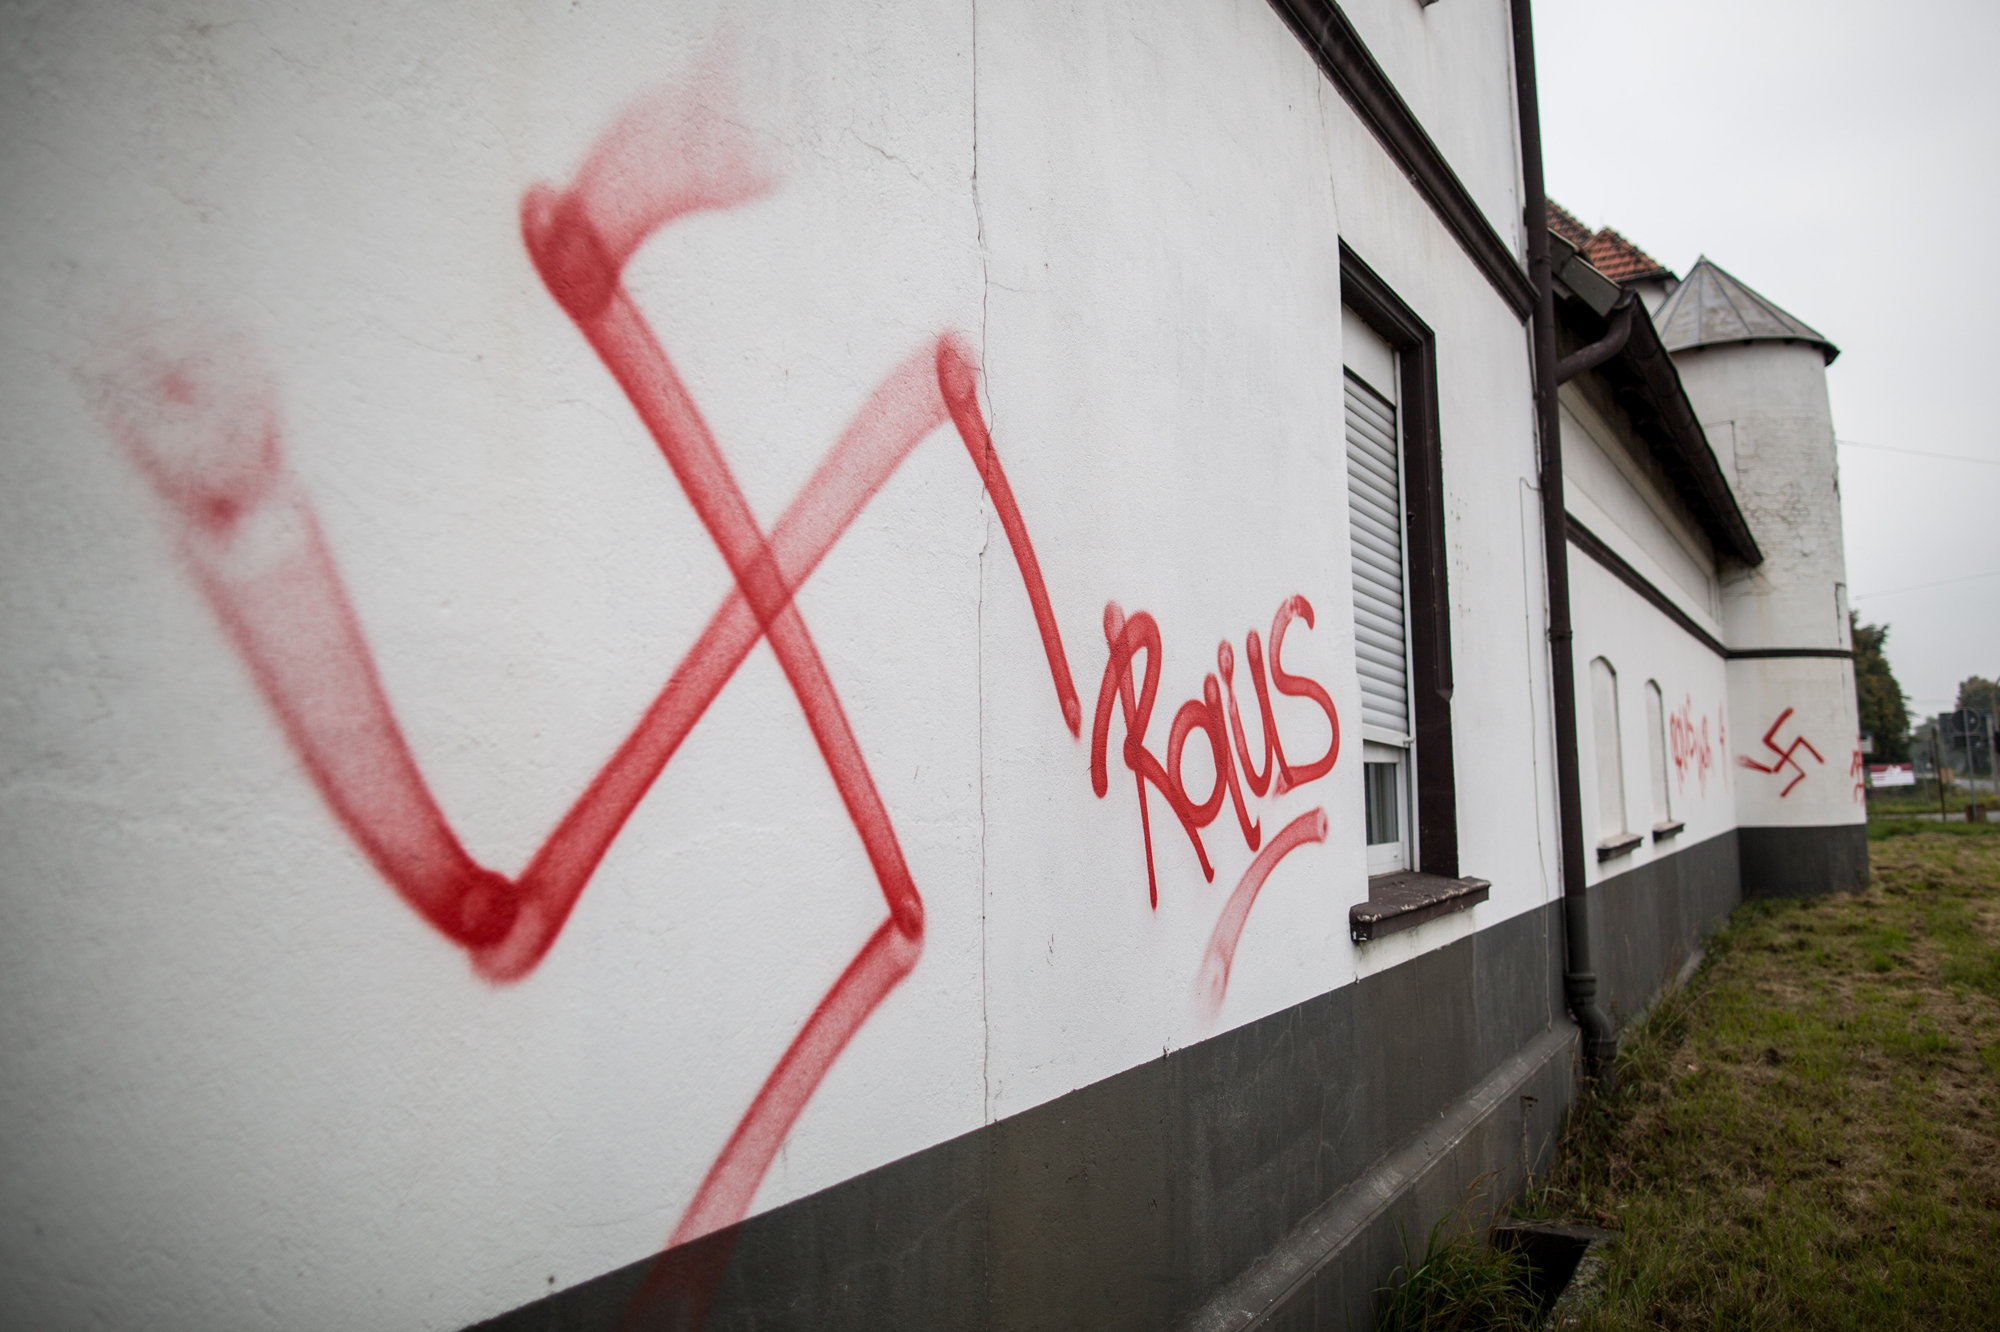 Nazi граффити. Активисты граффити. Main further